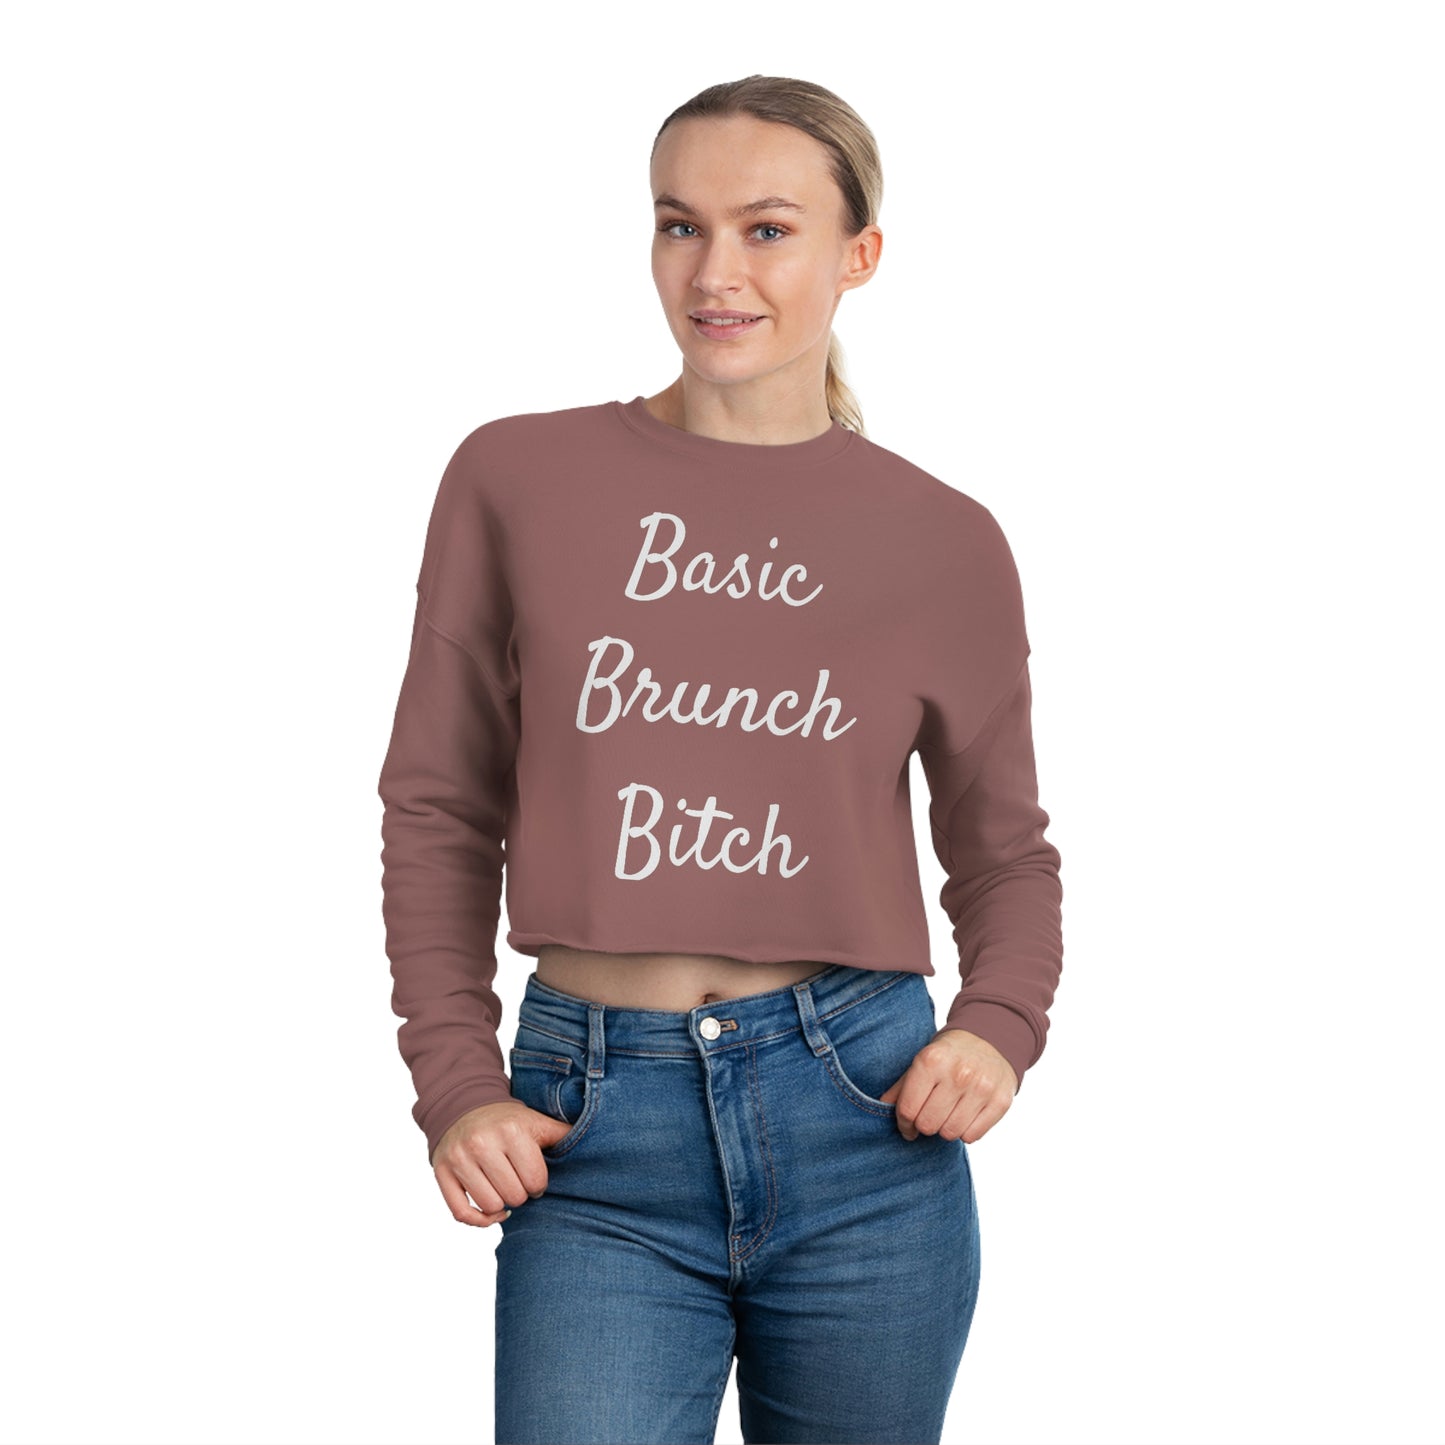 Basic Brunch Bitch Women's Cropped Sweatshirt